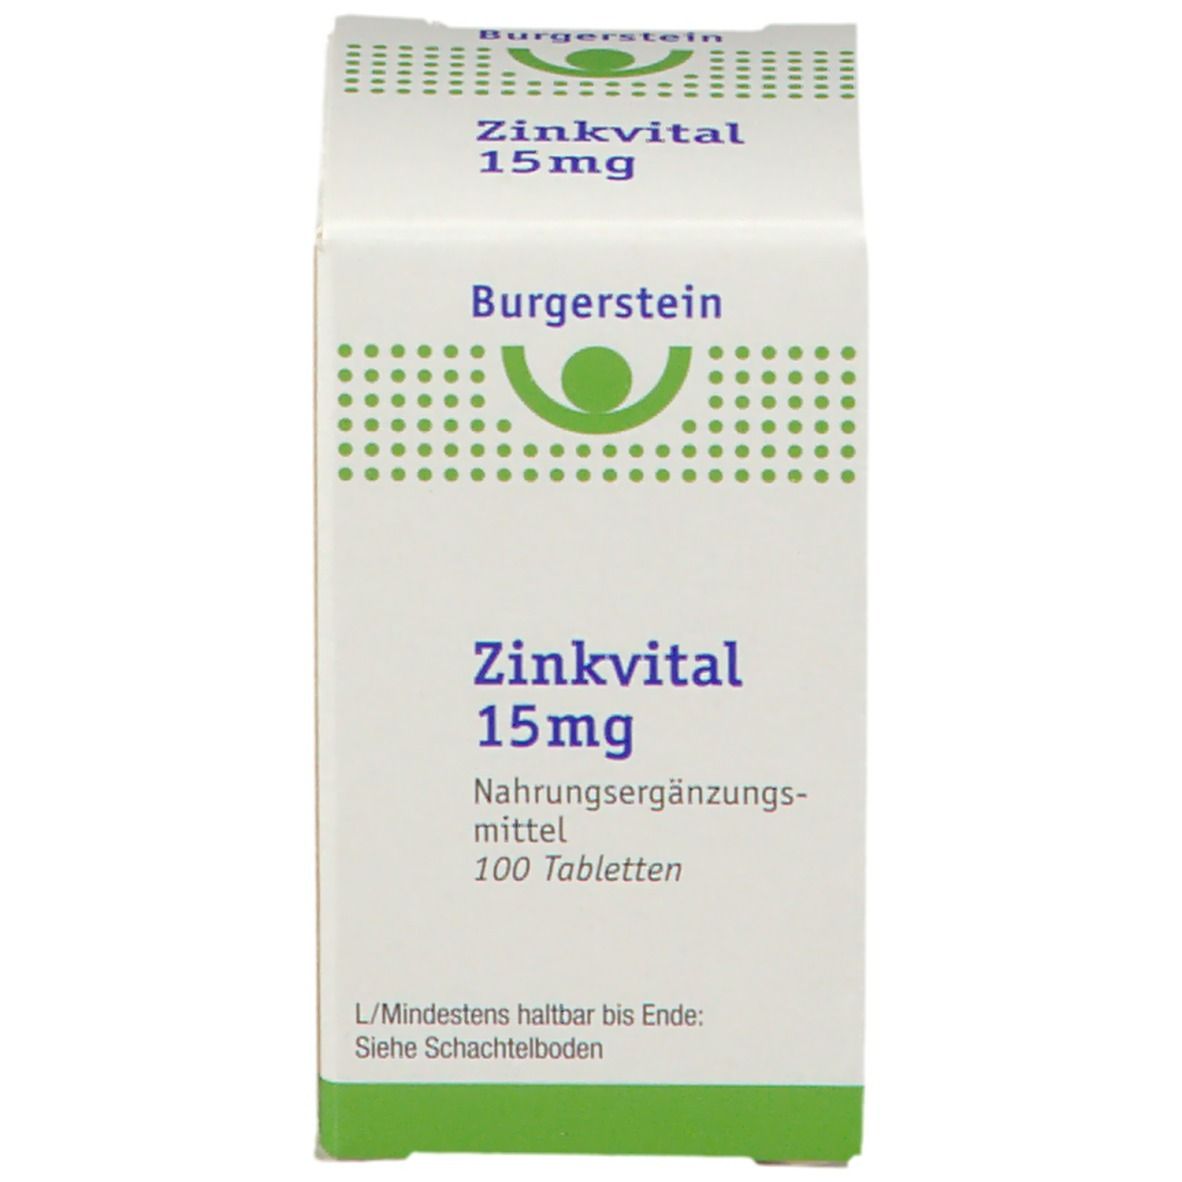 Burgerstein Zinkvital 15 mg